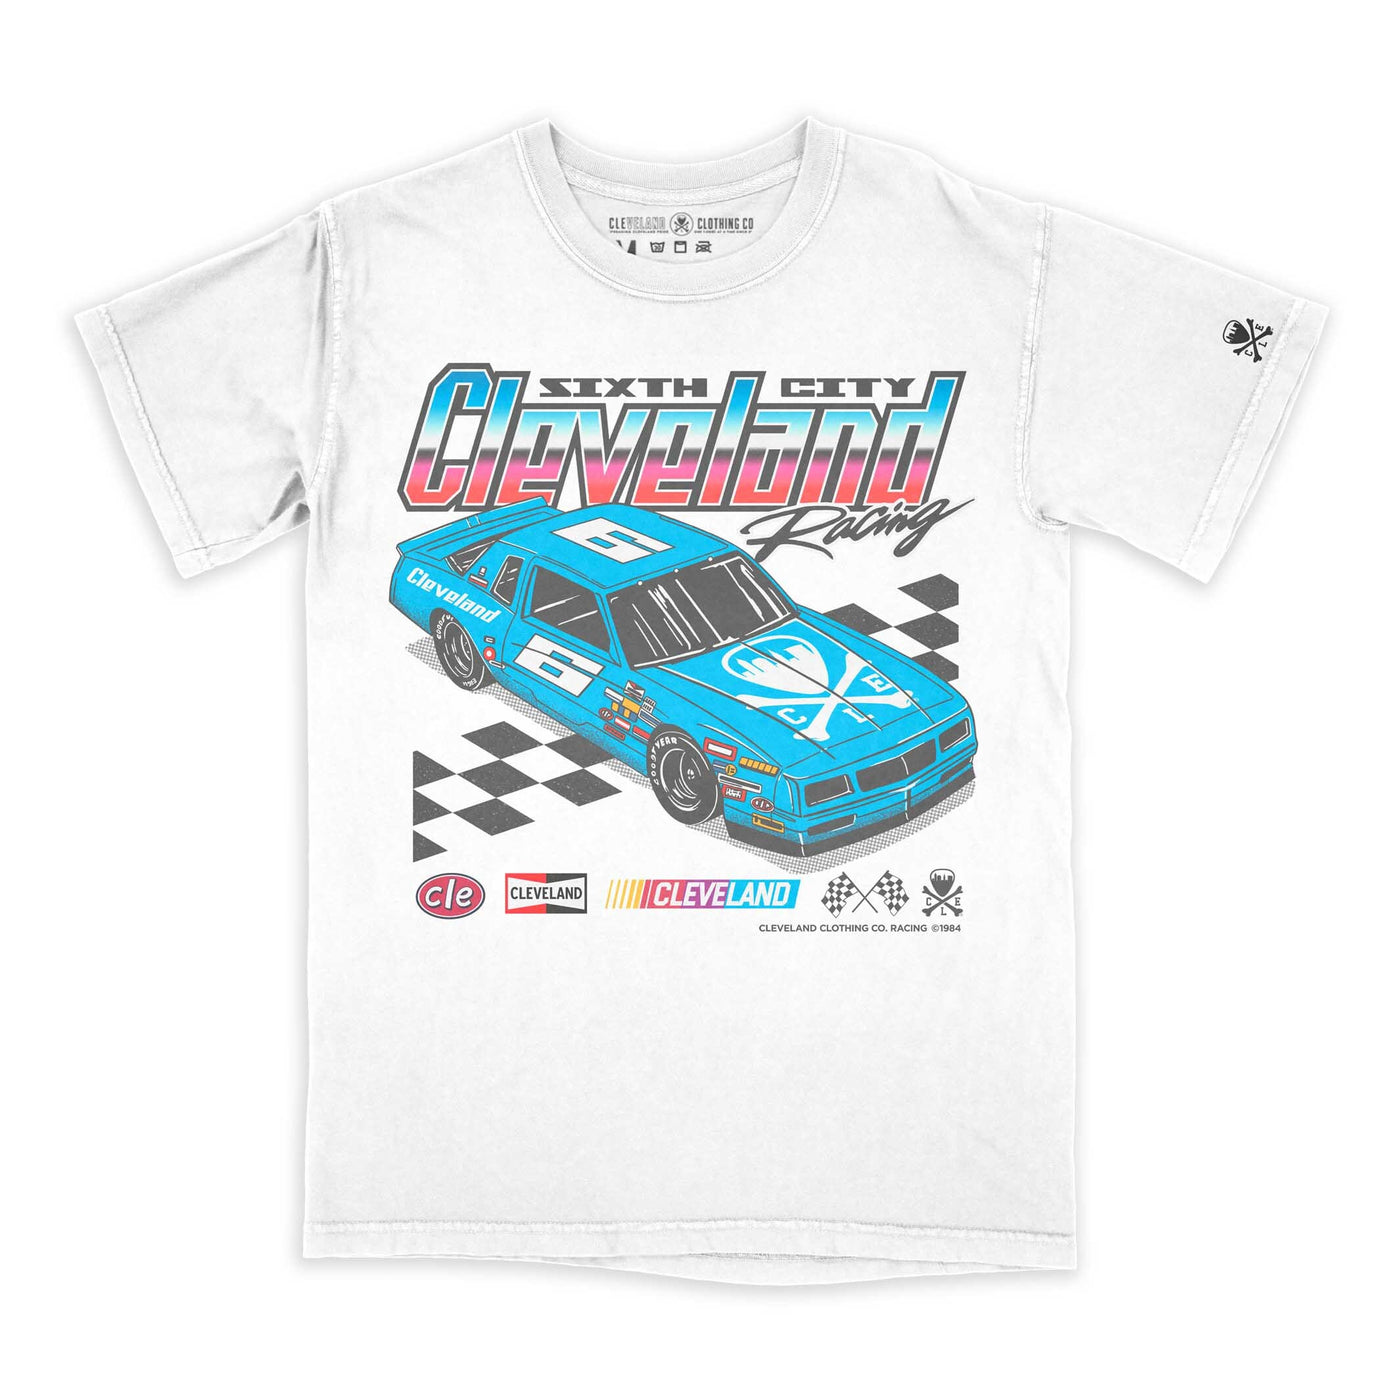 Sixth City Racing - Unisex Crew T Shirt